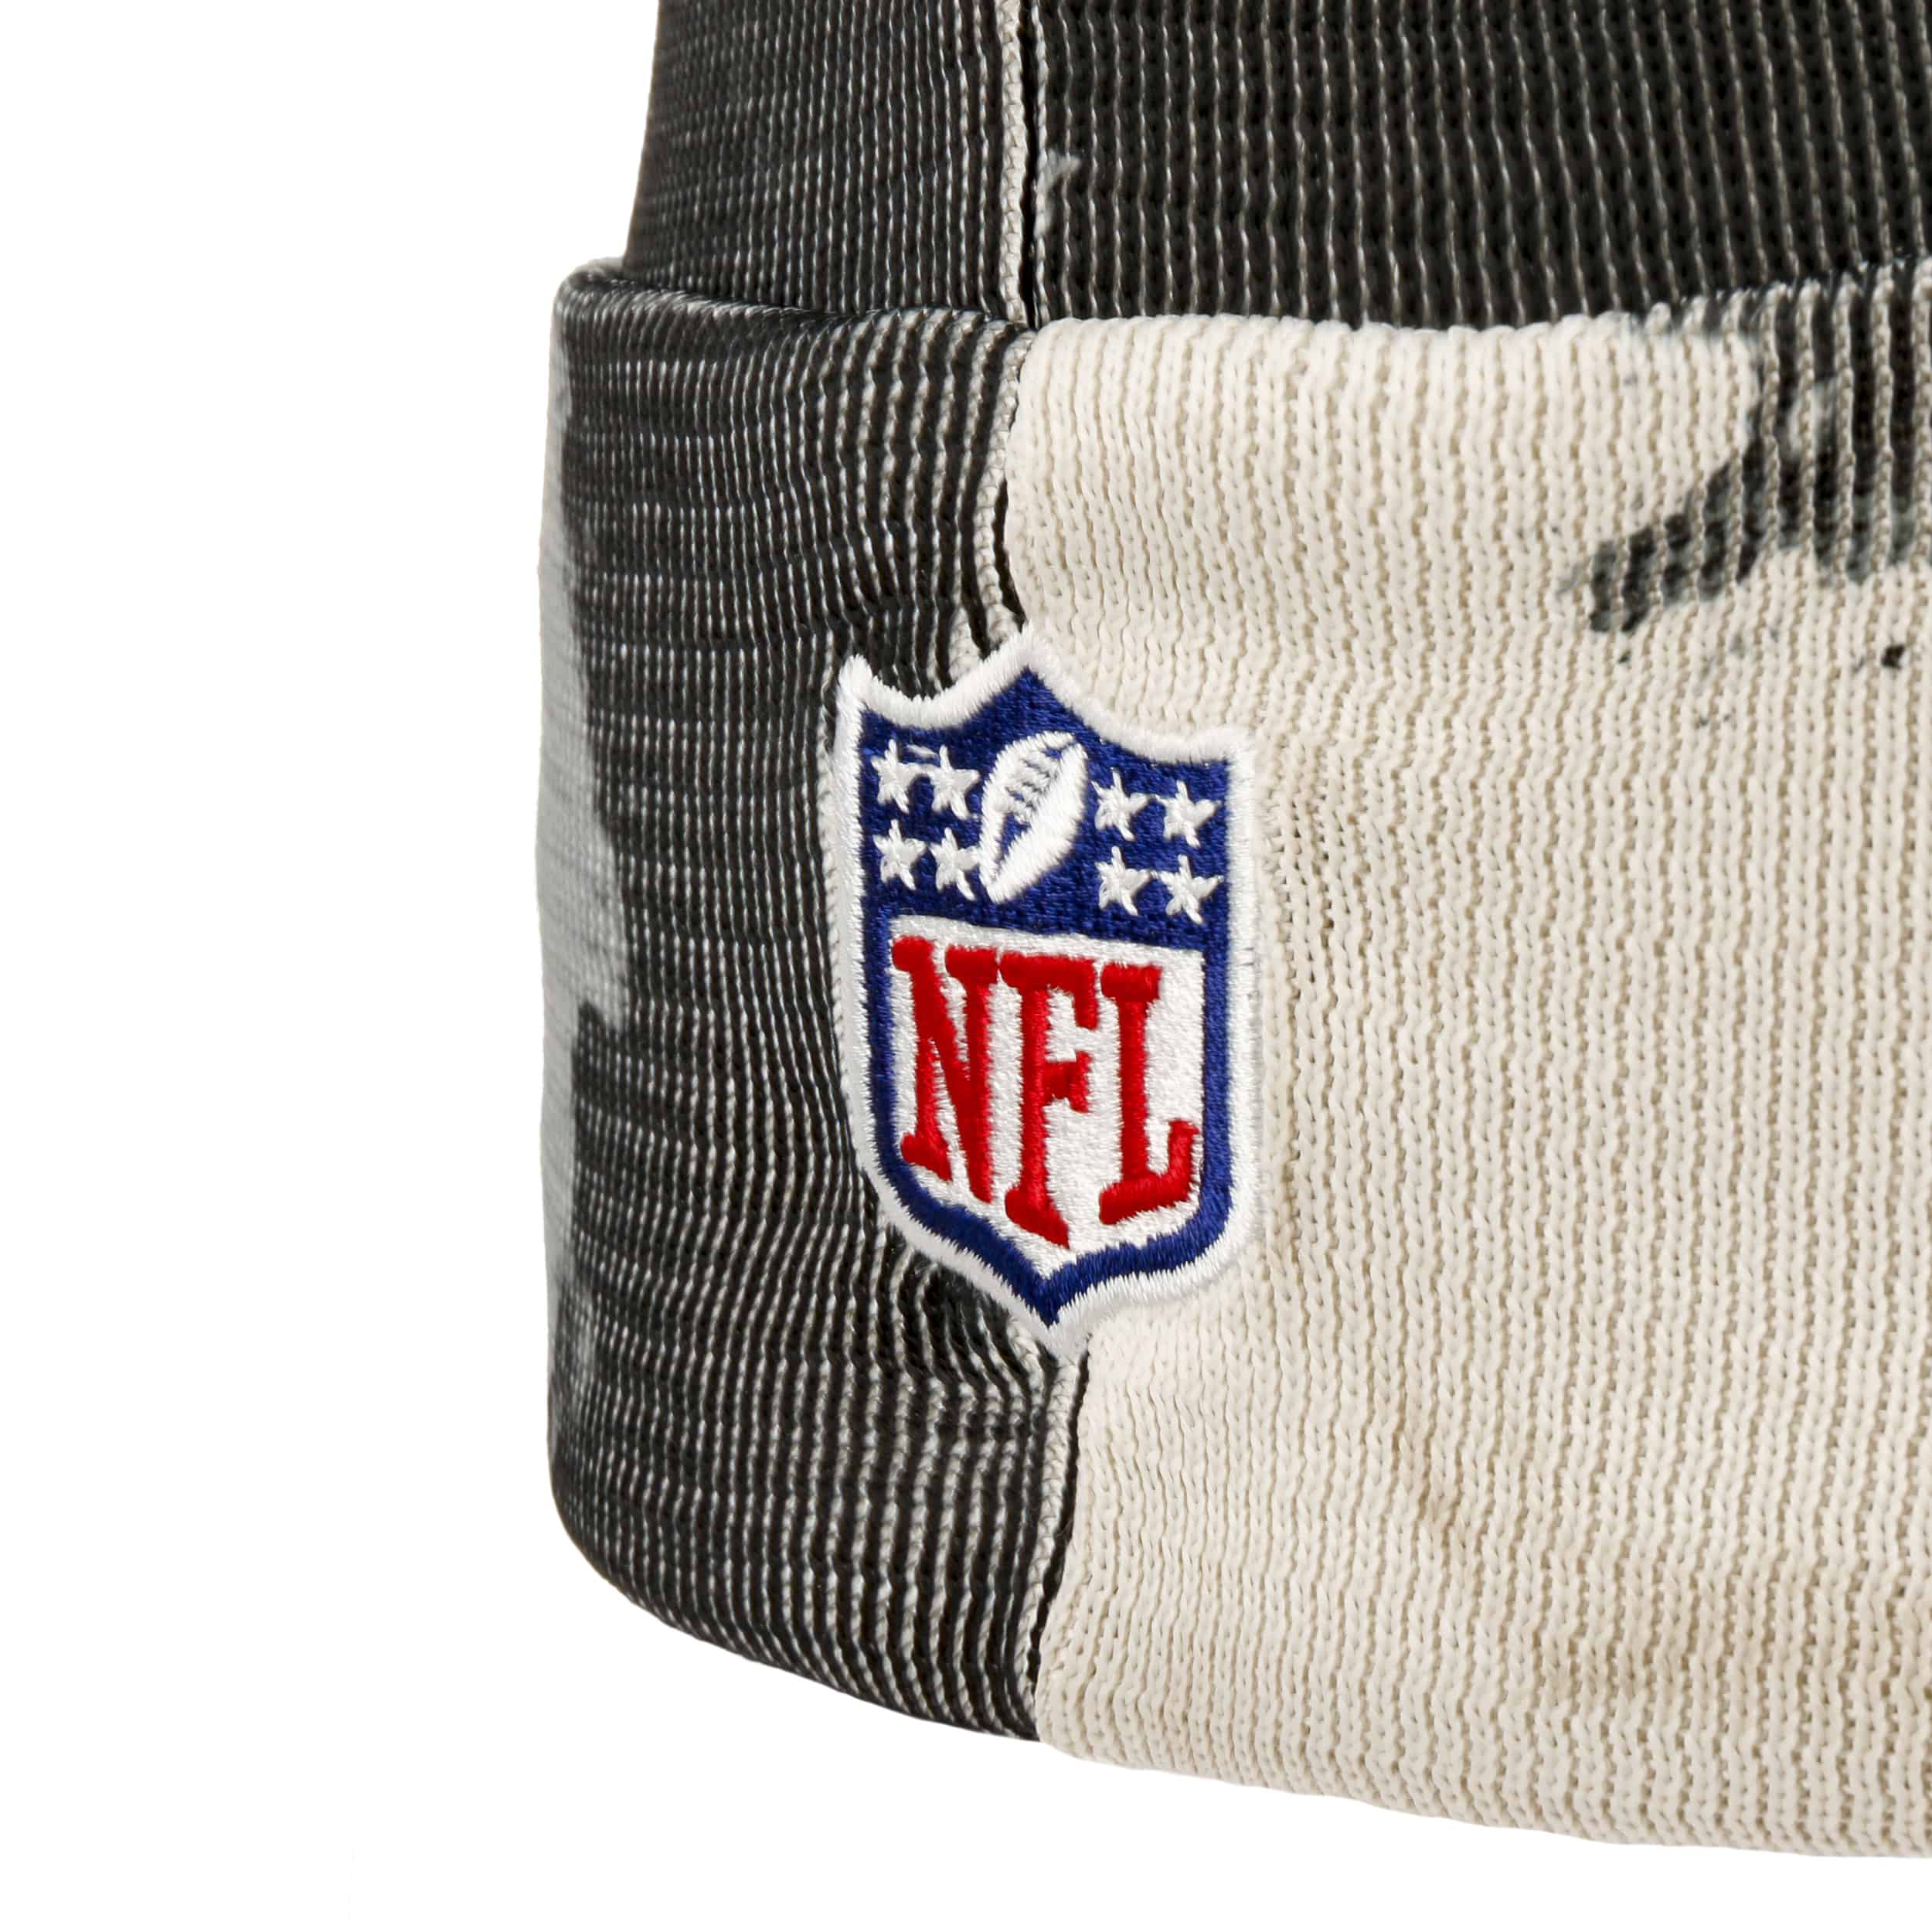 NFL 22 Ink Knit Raiders Beanie Hat by New Era